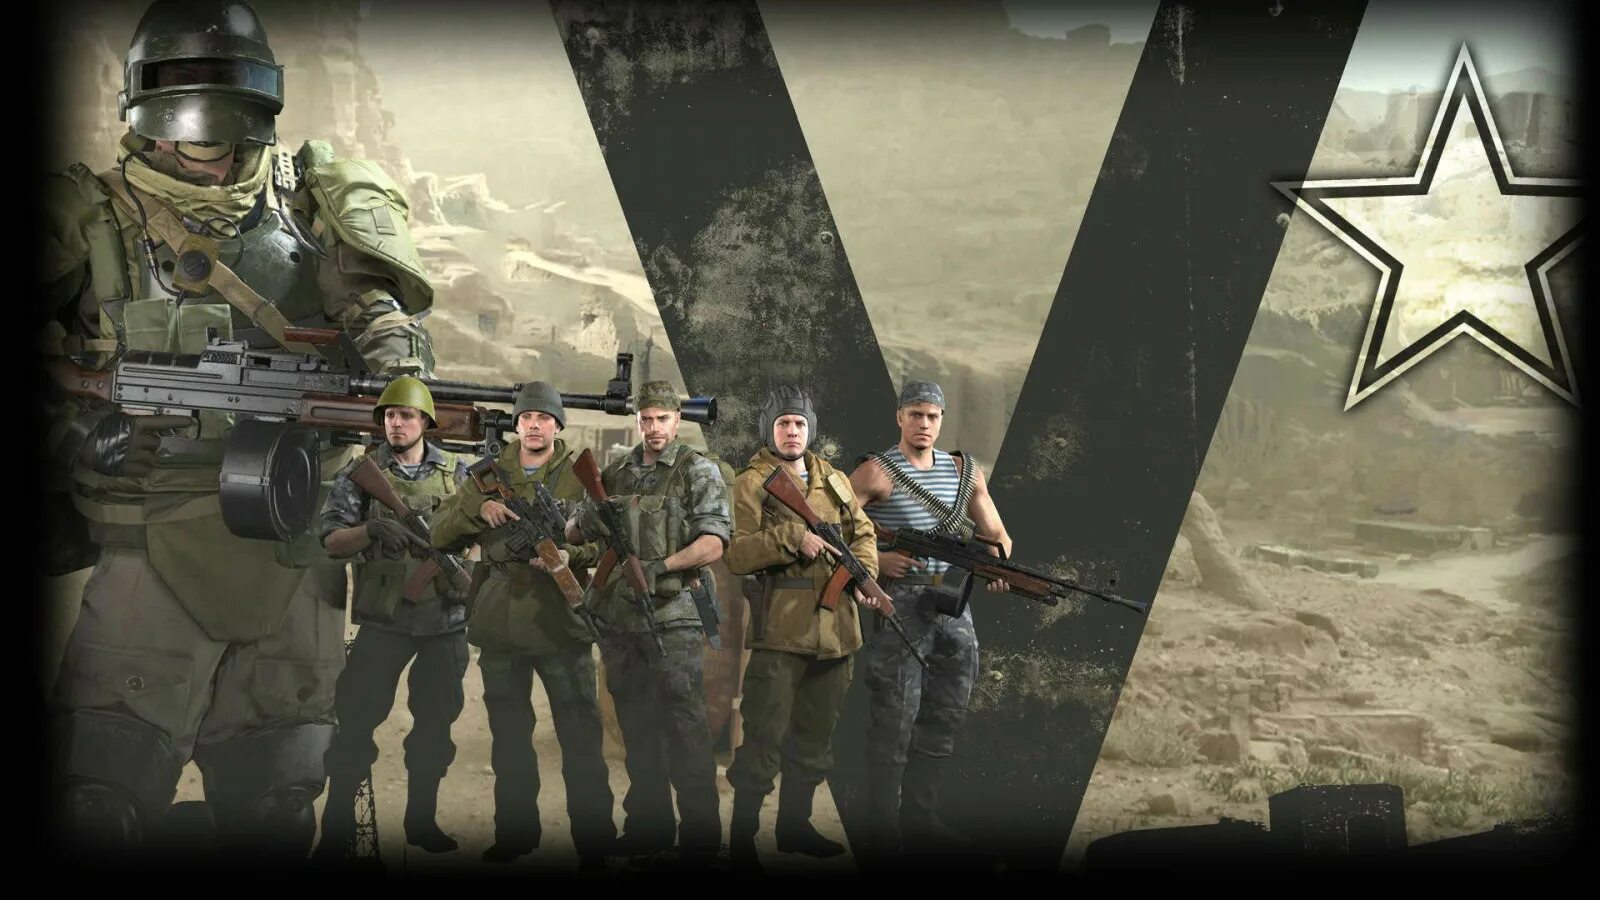 Повернутые на z войне. Metal Solid Gear 5 the Phantom солдаты. Metal Gear Solid 5 Soviet Soldiers. Metal Gear Solid 5 советские солдаты. Metal Gear Solid Soviet Soldiers.